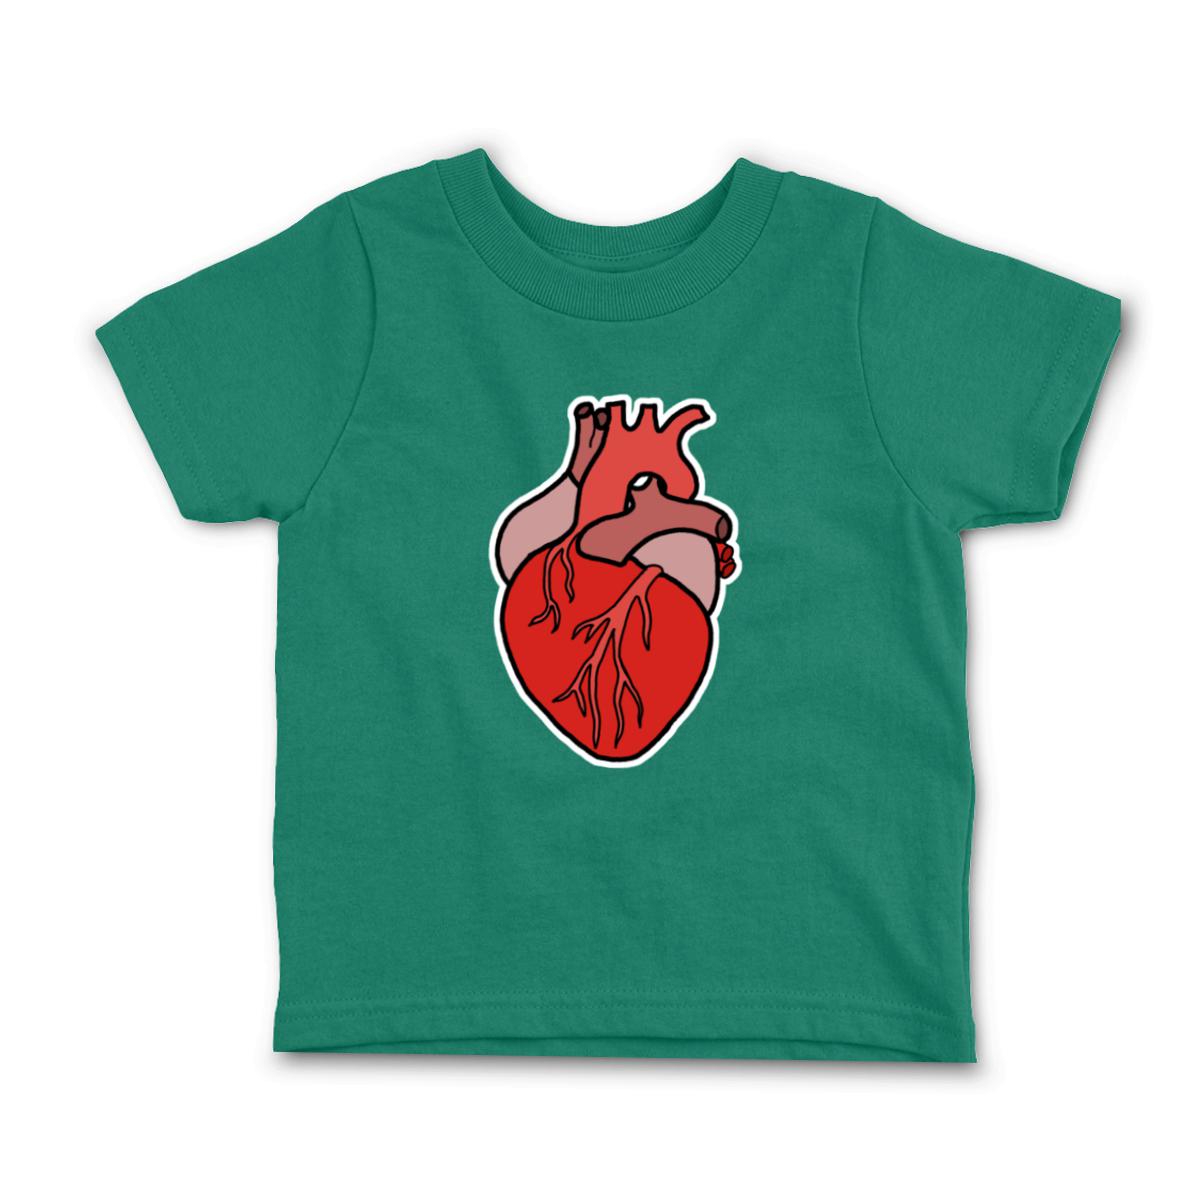 Illustrative Heart Toddler Tee 56T kelly